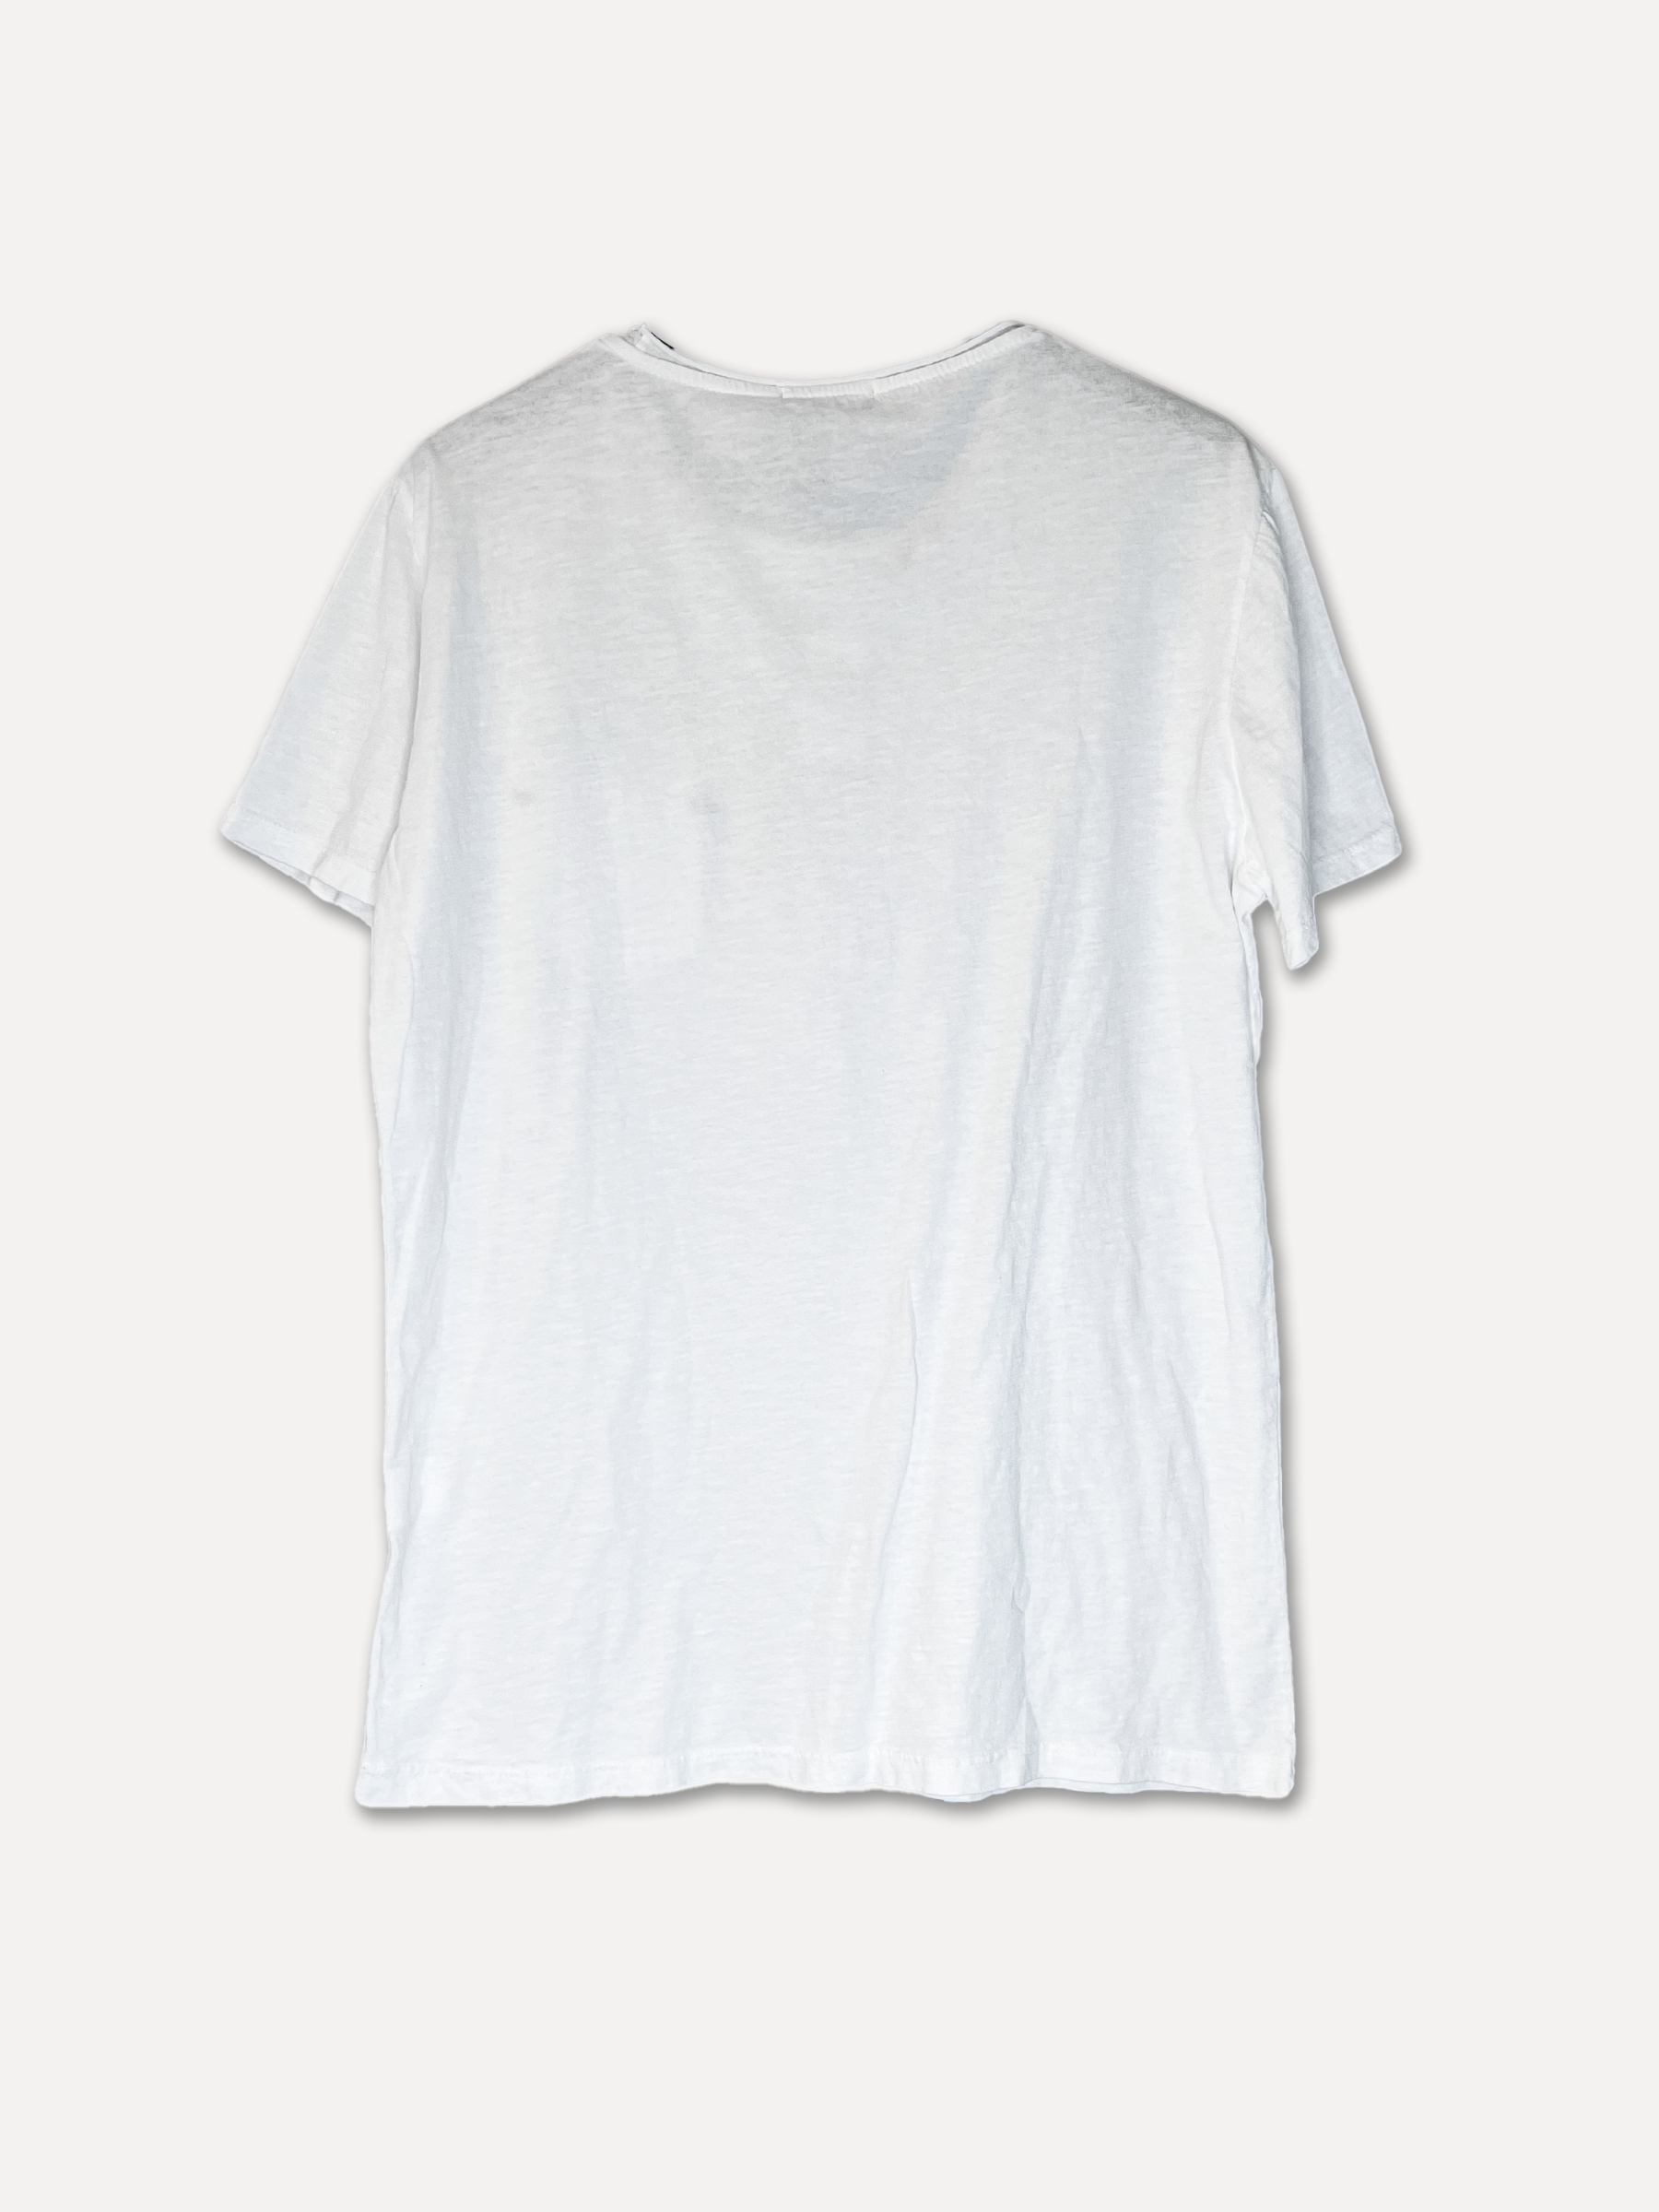 MIKE T-Shirt, White